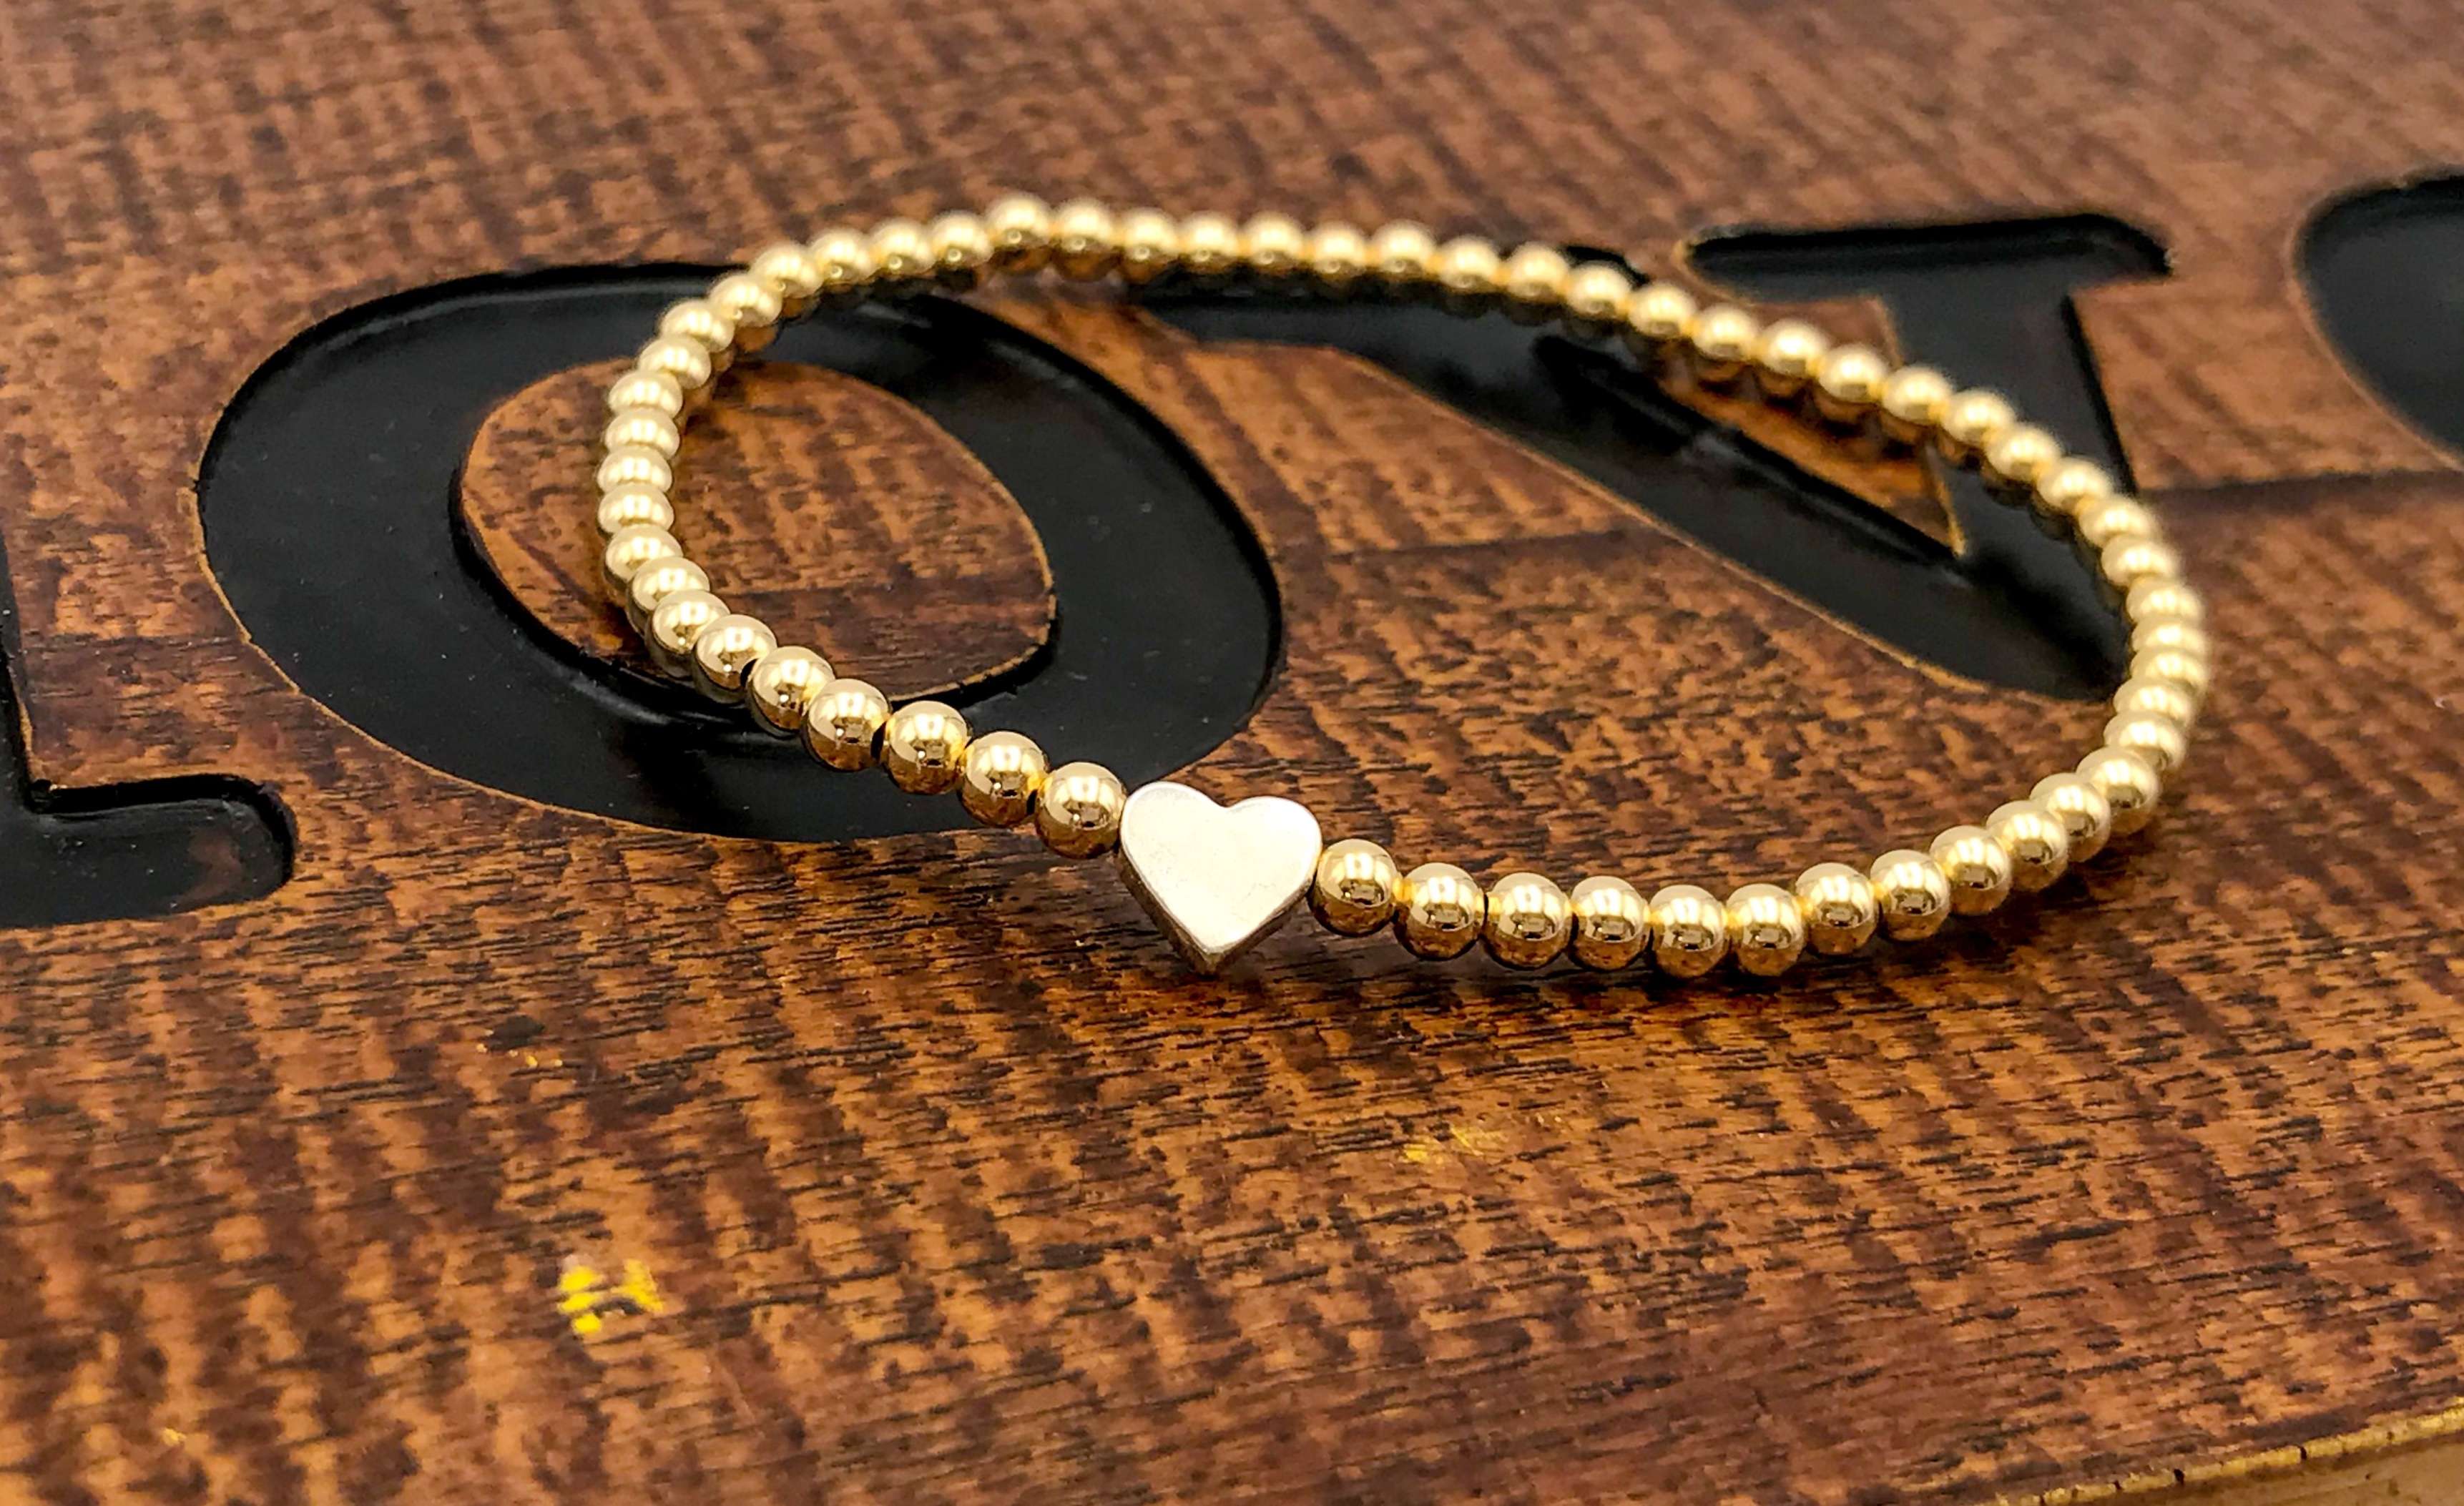 How To Make Charm Bracelets With Beads